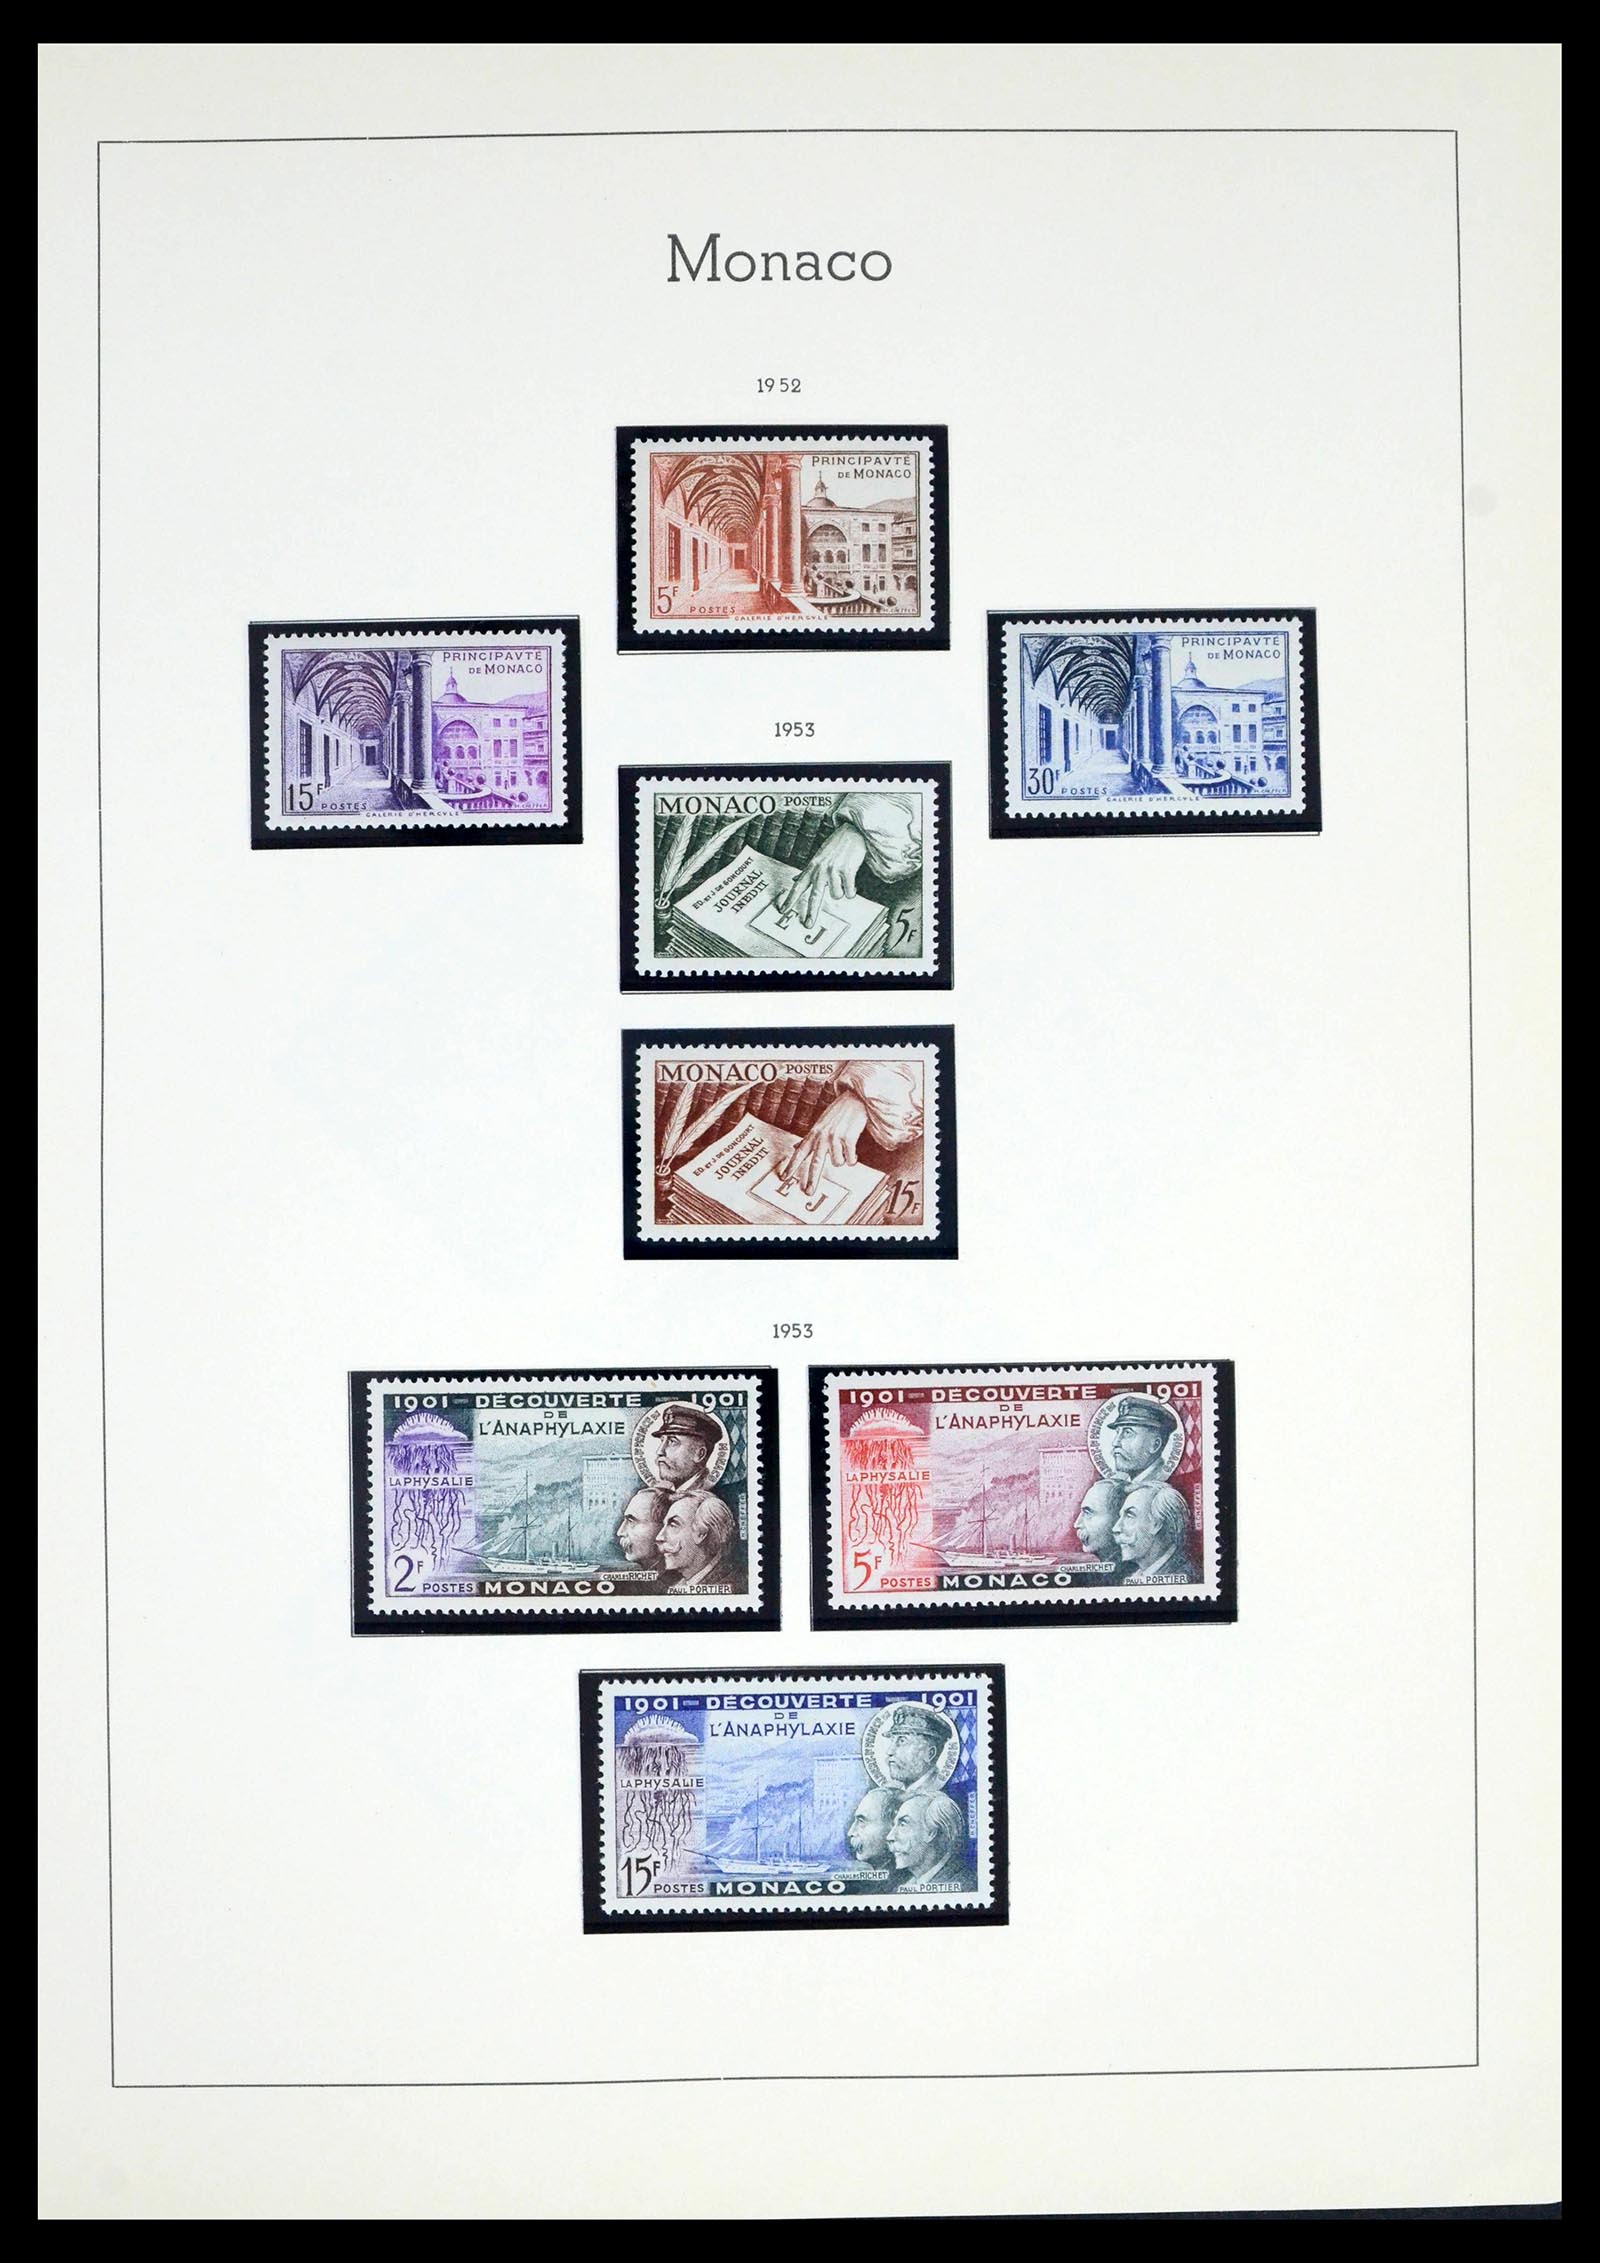 39392 0043 - Stamp collection 39392 Monaco 1885-1999.